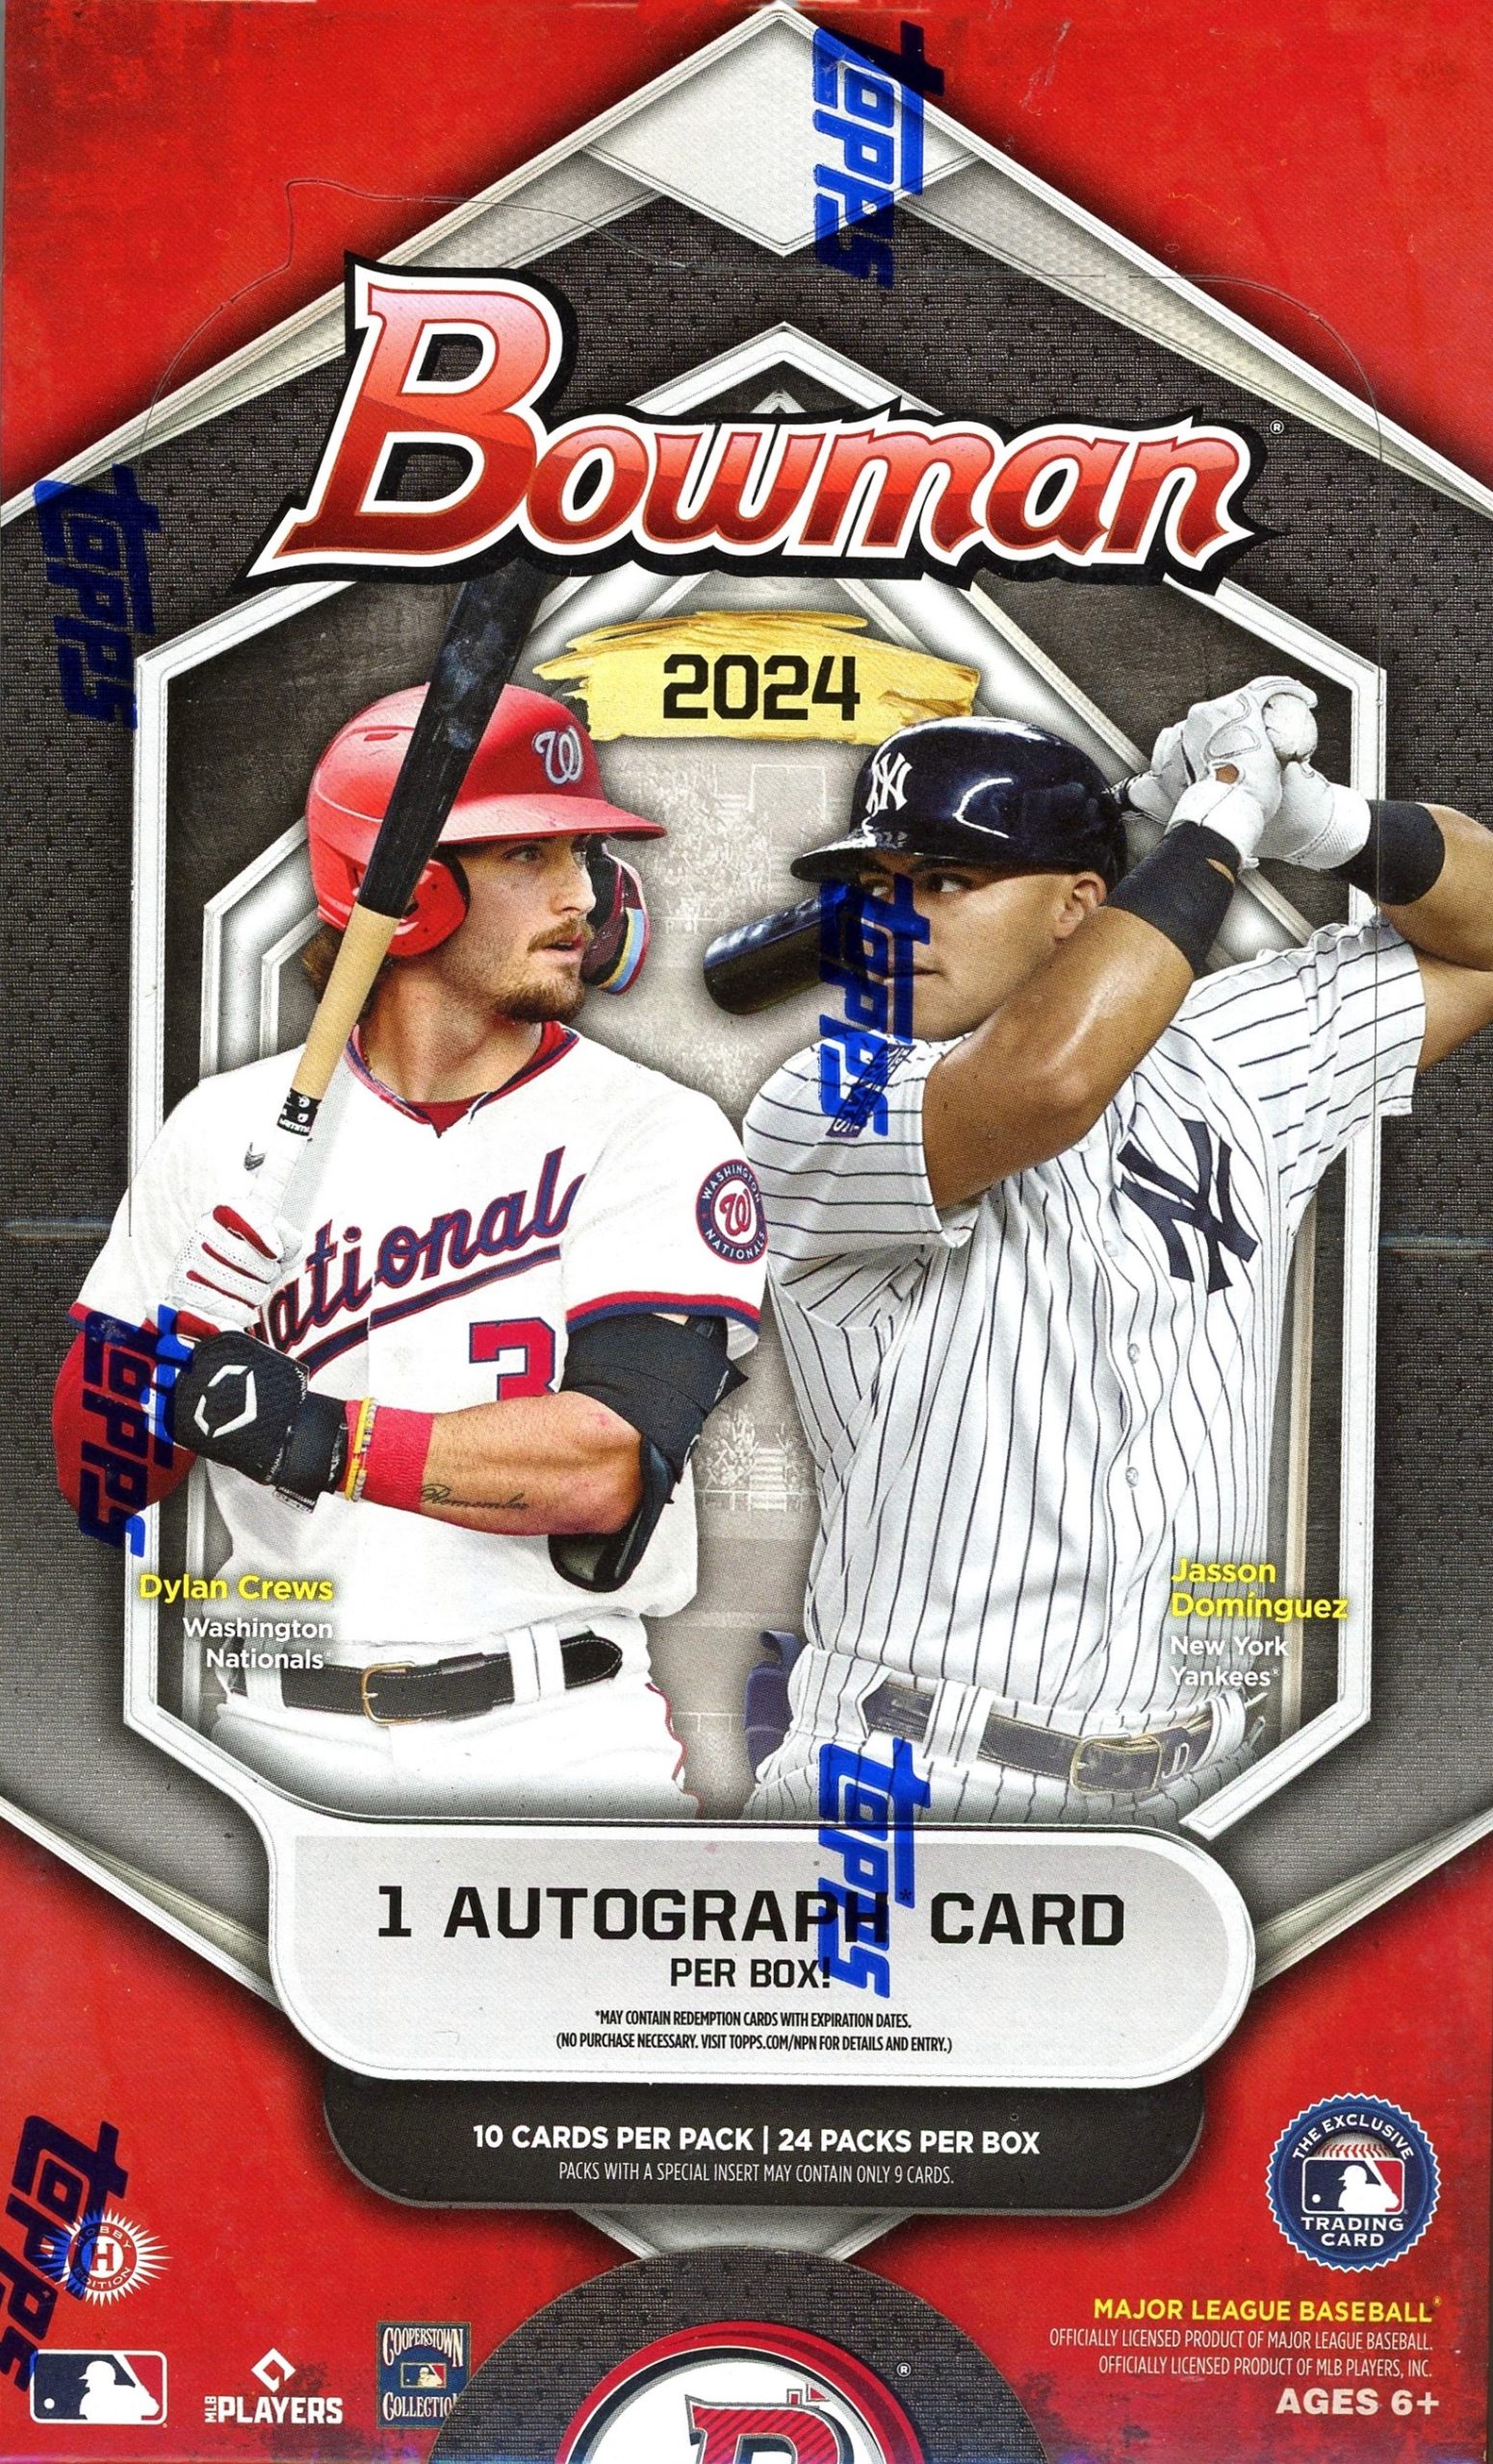 ⚾ MLB 2024 TOPPS BOWMAN BASEBALL HOBBY【製品情報】 | Trading Card ...